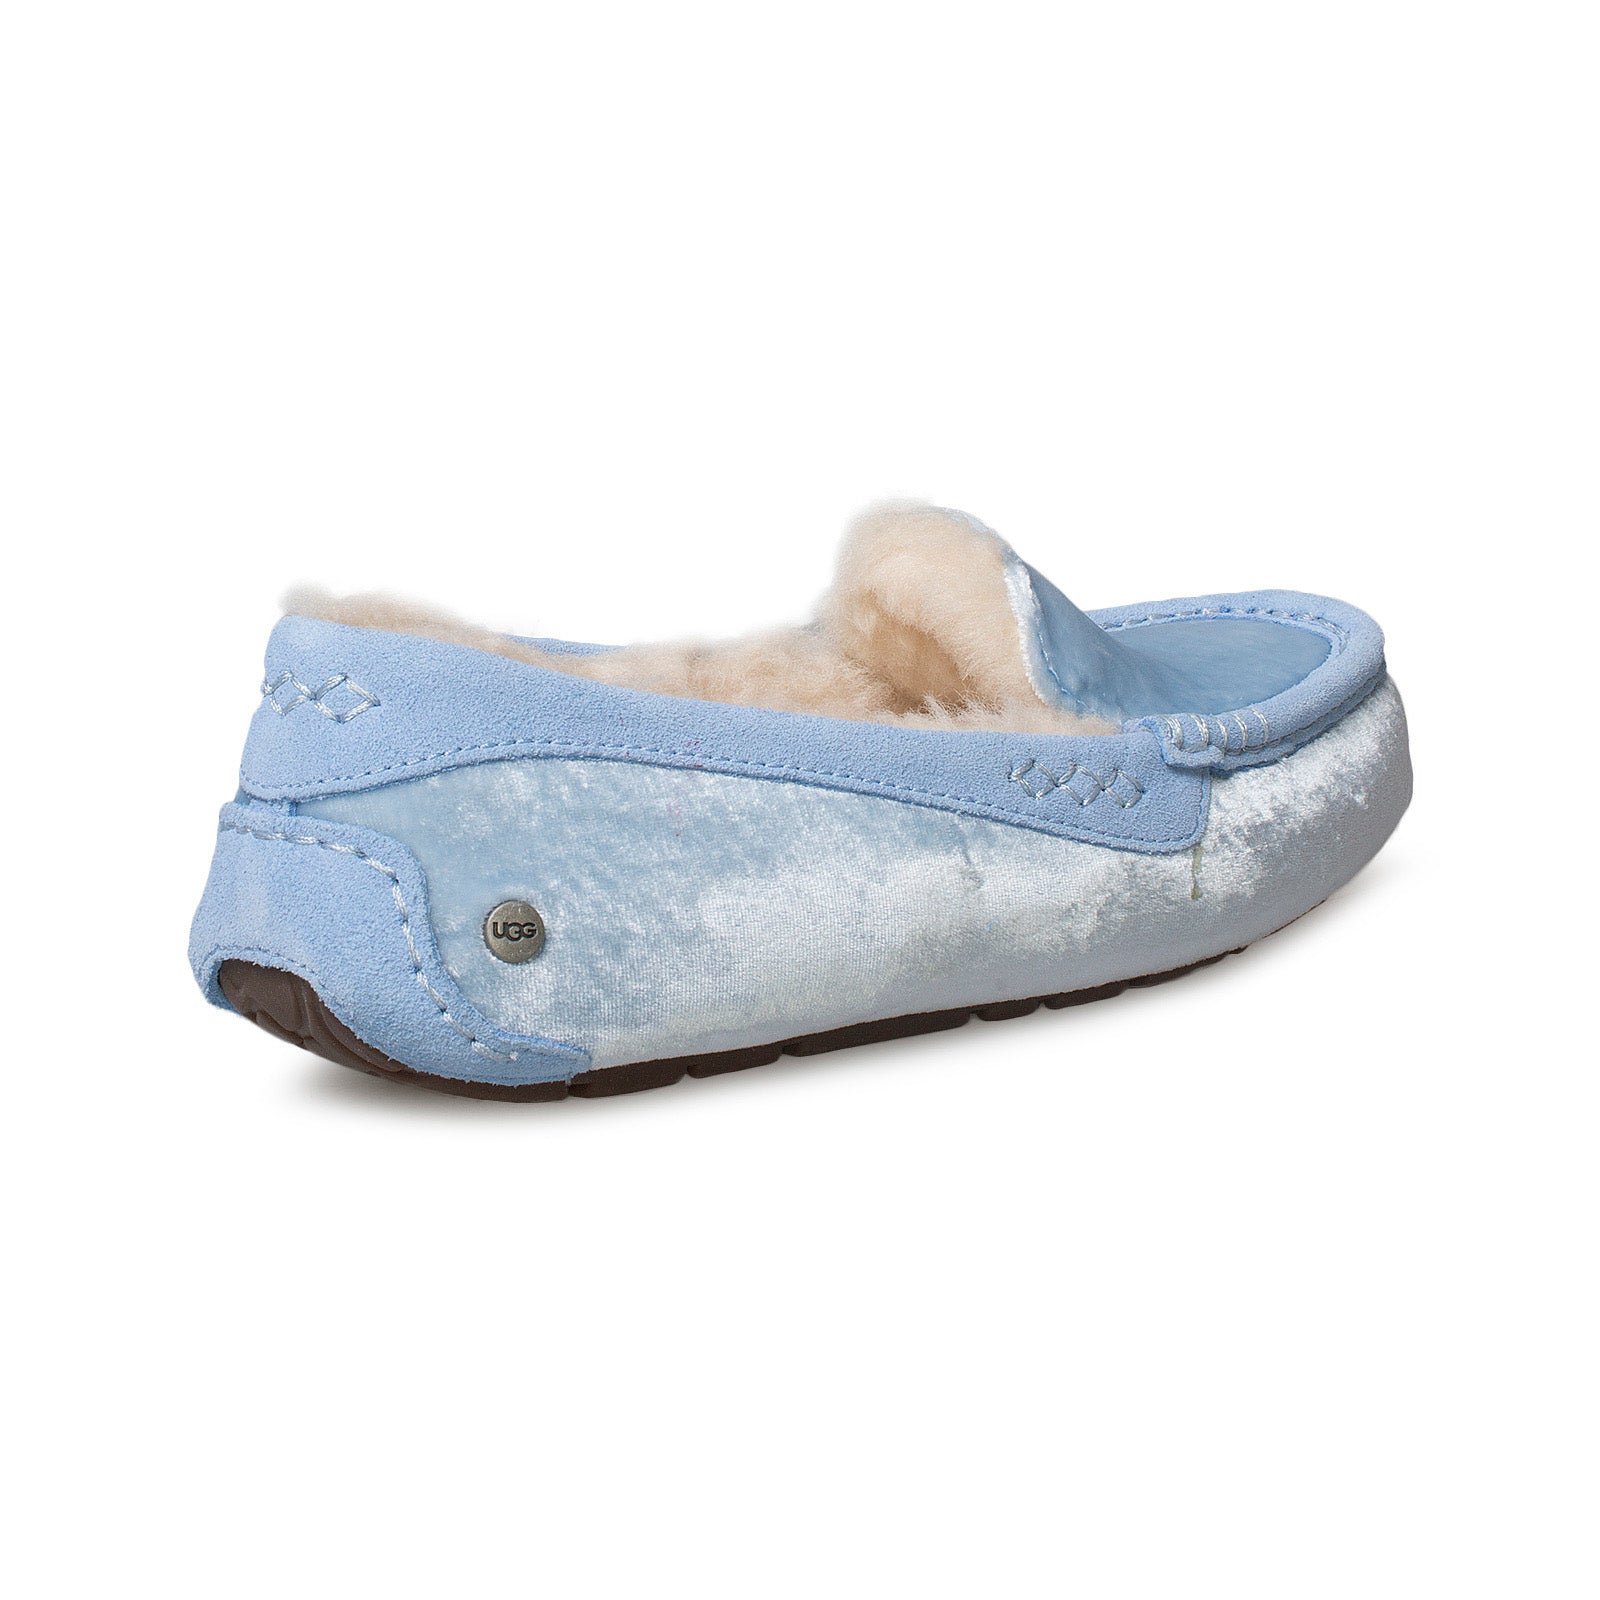 ugg ansley slippers blue